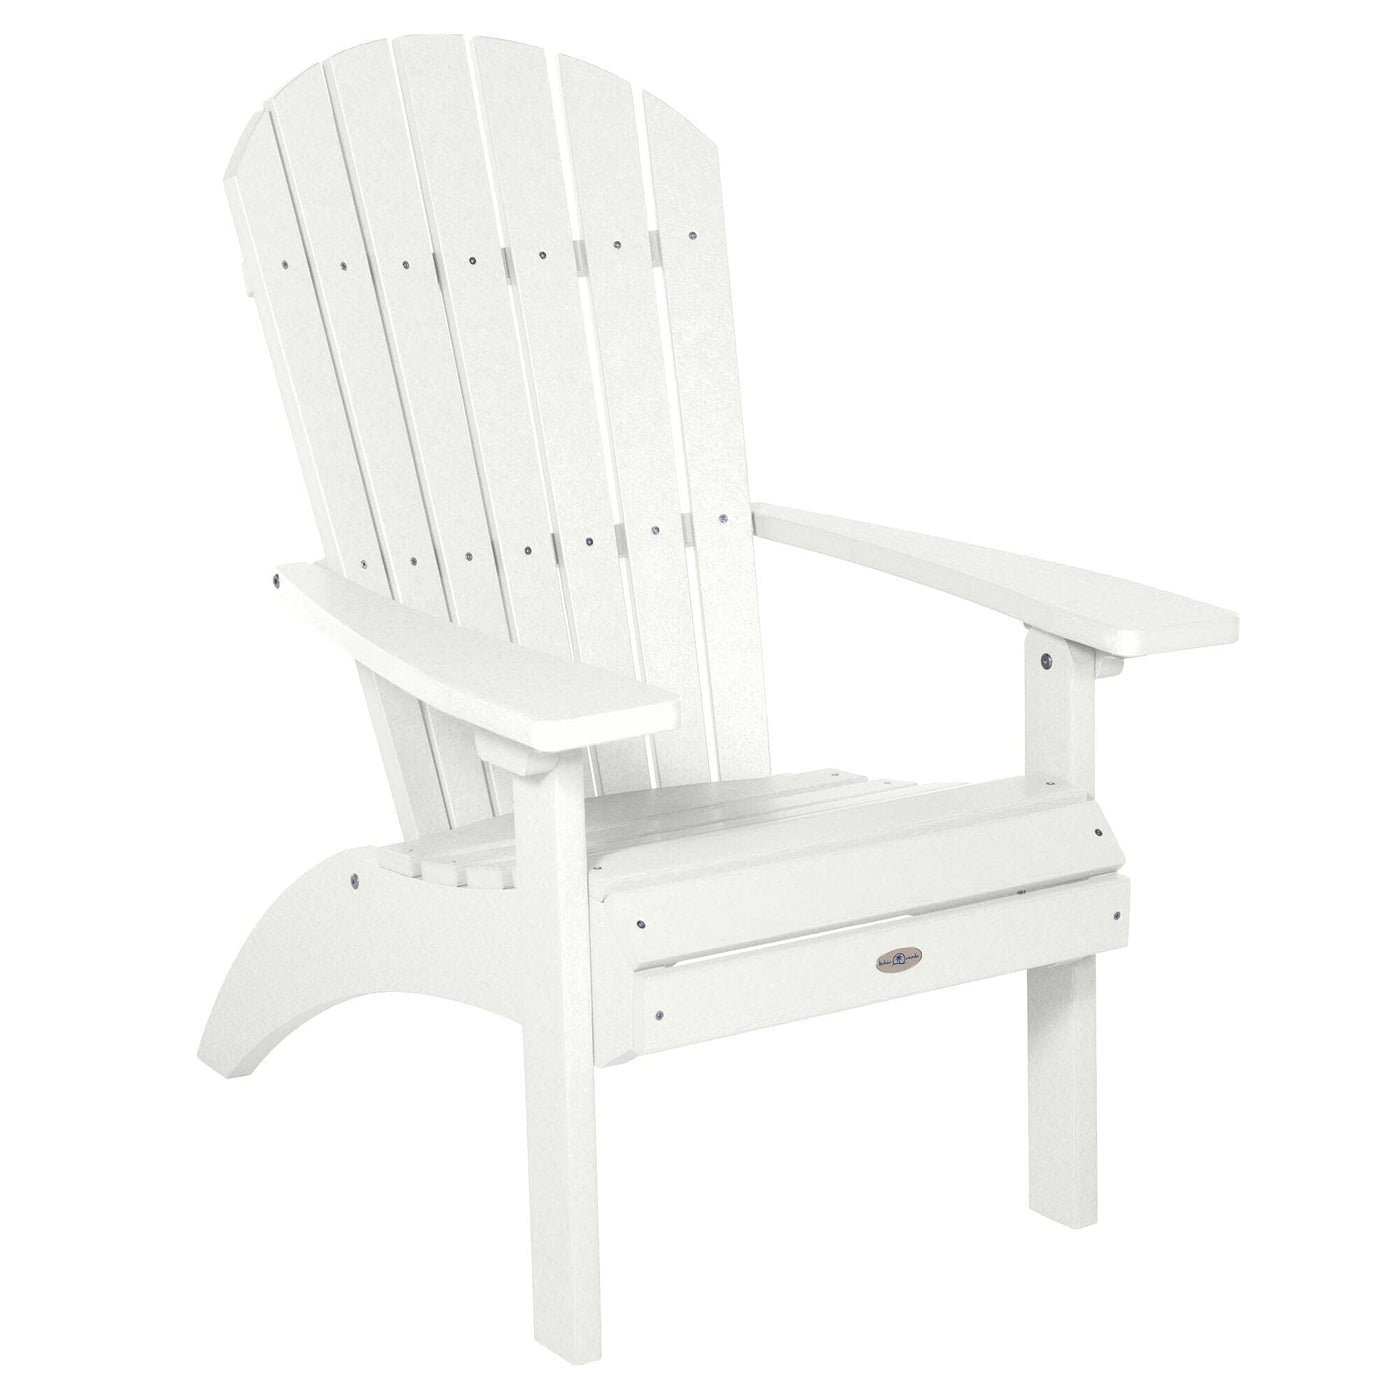 Waterfall Comfort Height Adirondack Chair Chair Bahia Verde Outdoors Coconut White 